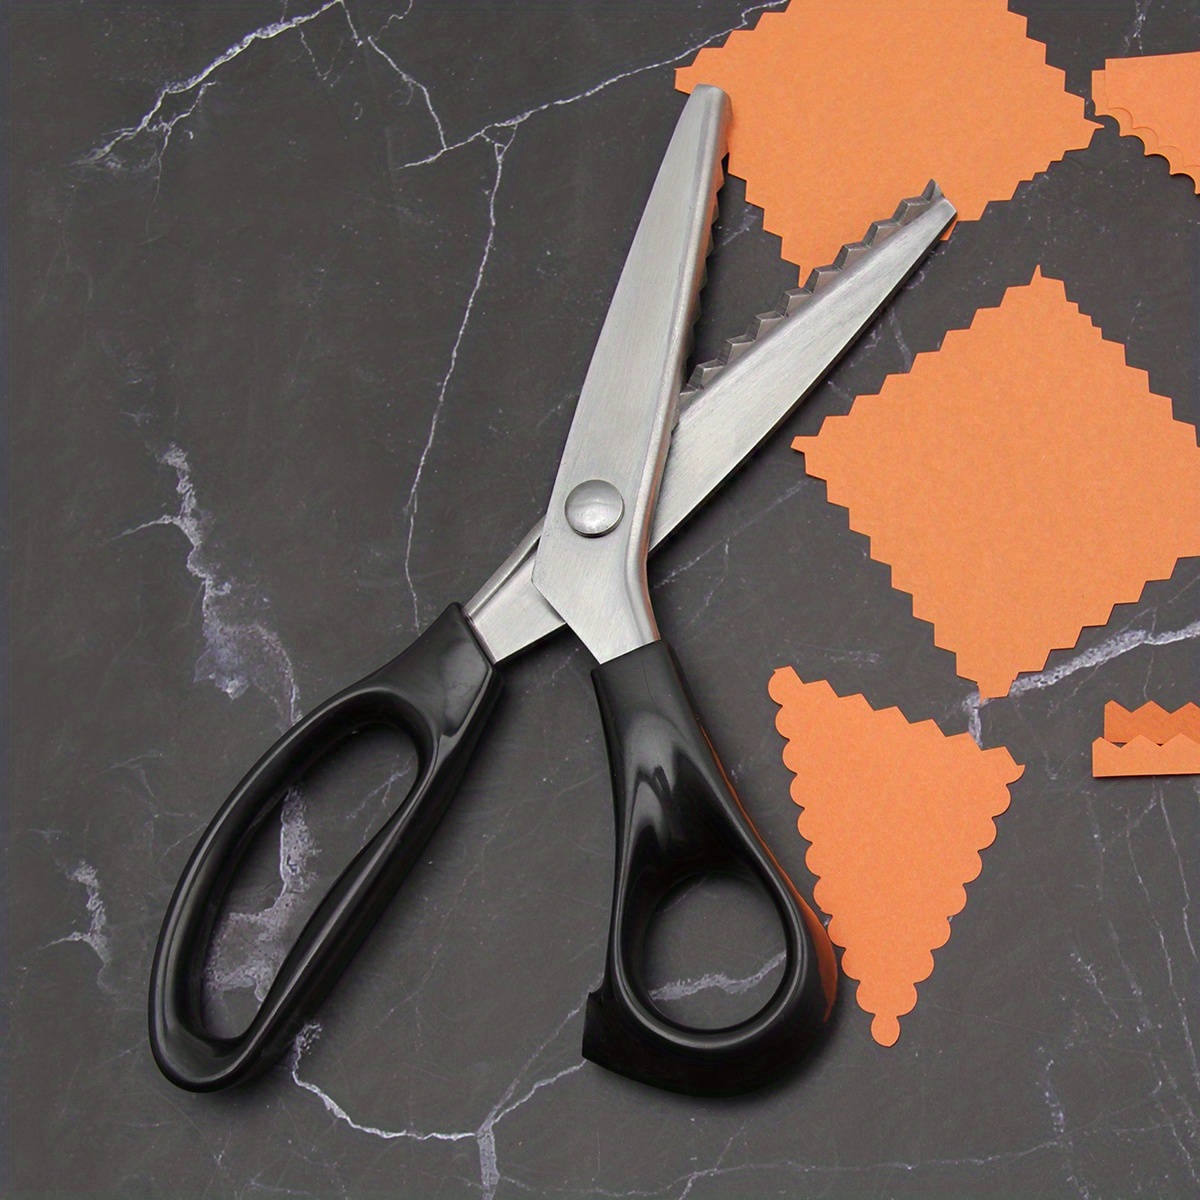 Triangle fabric lace scissors wave pattern saw pattern scissors